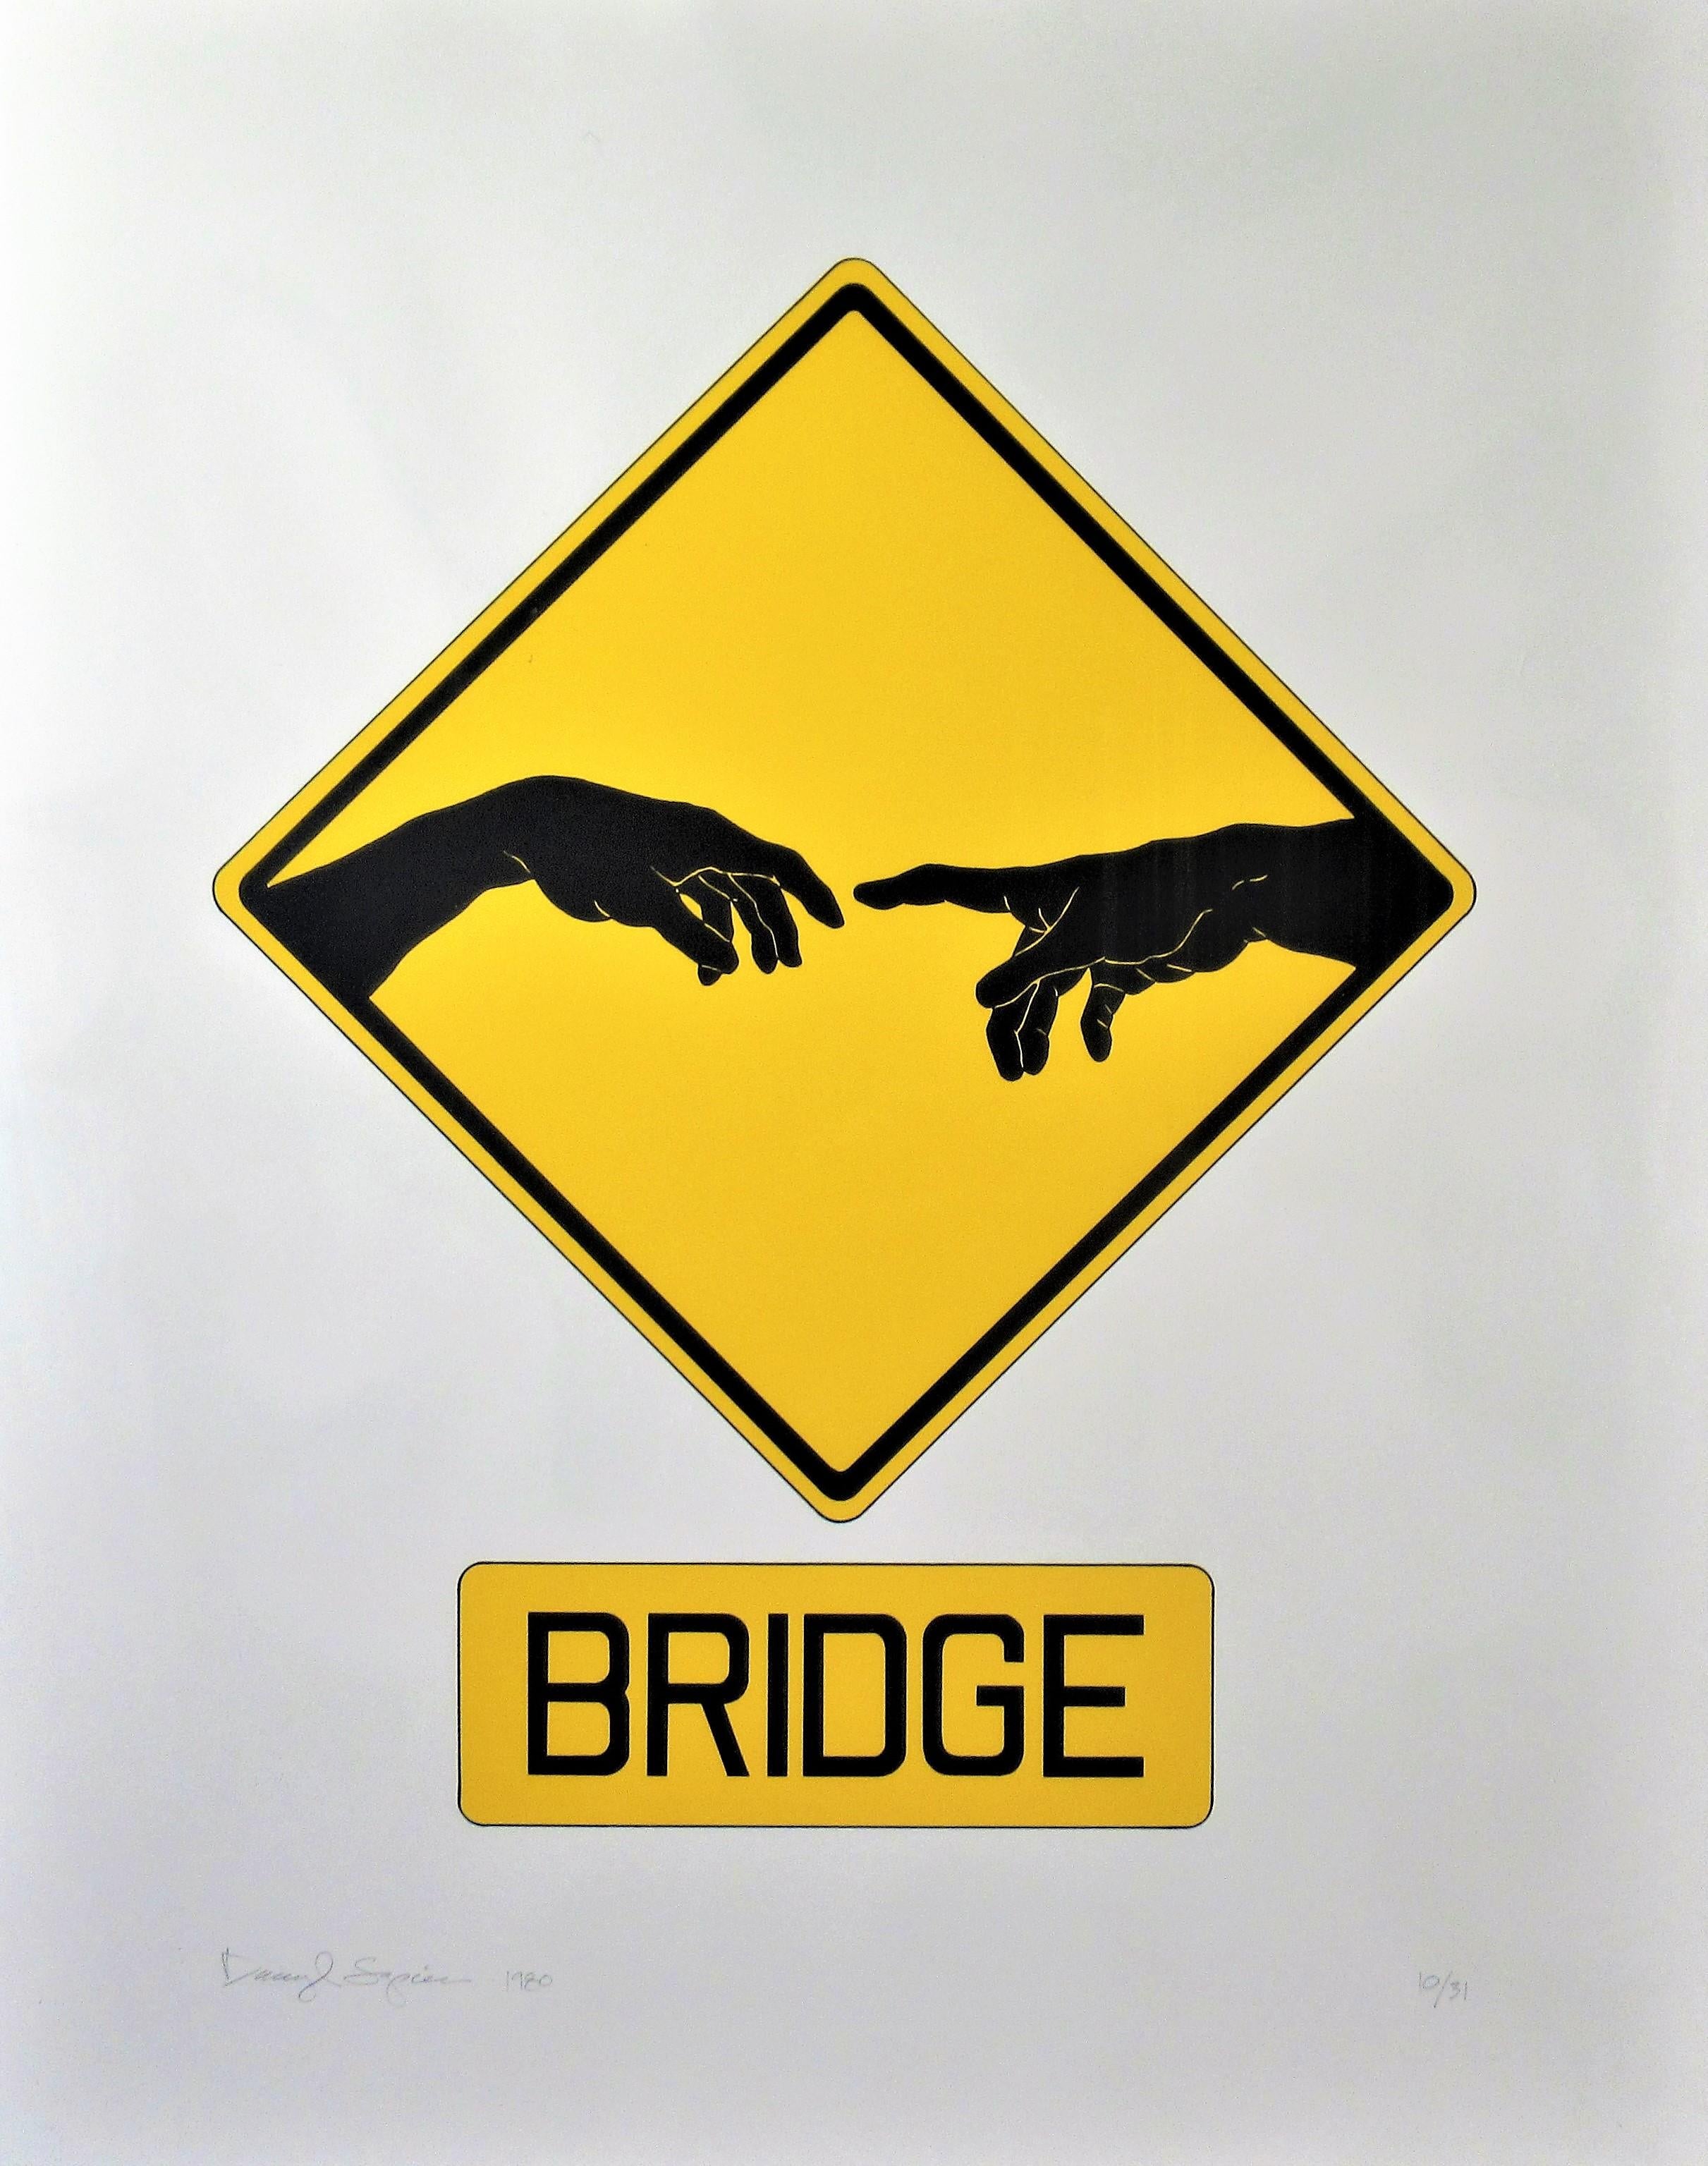 Bridge - Print by Darryl Sapien